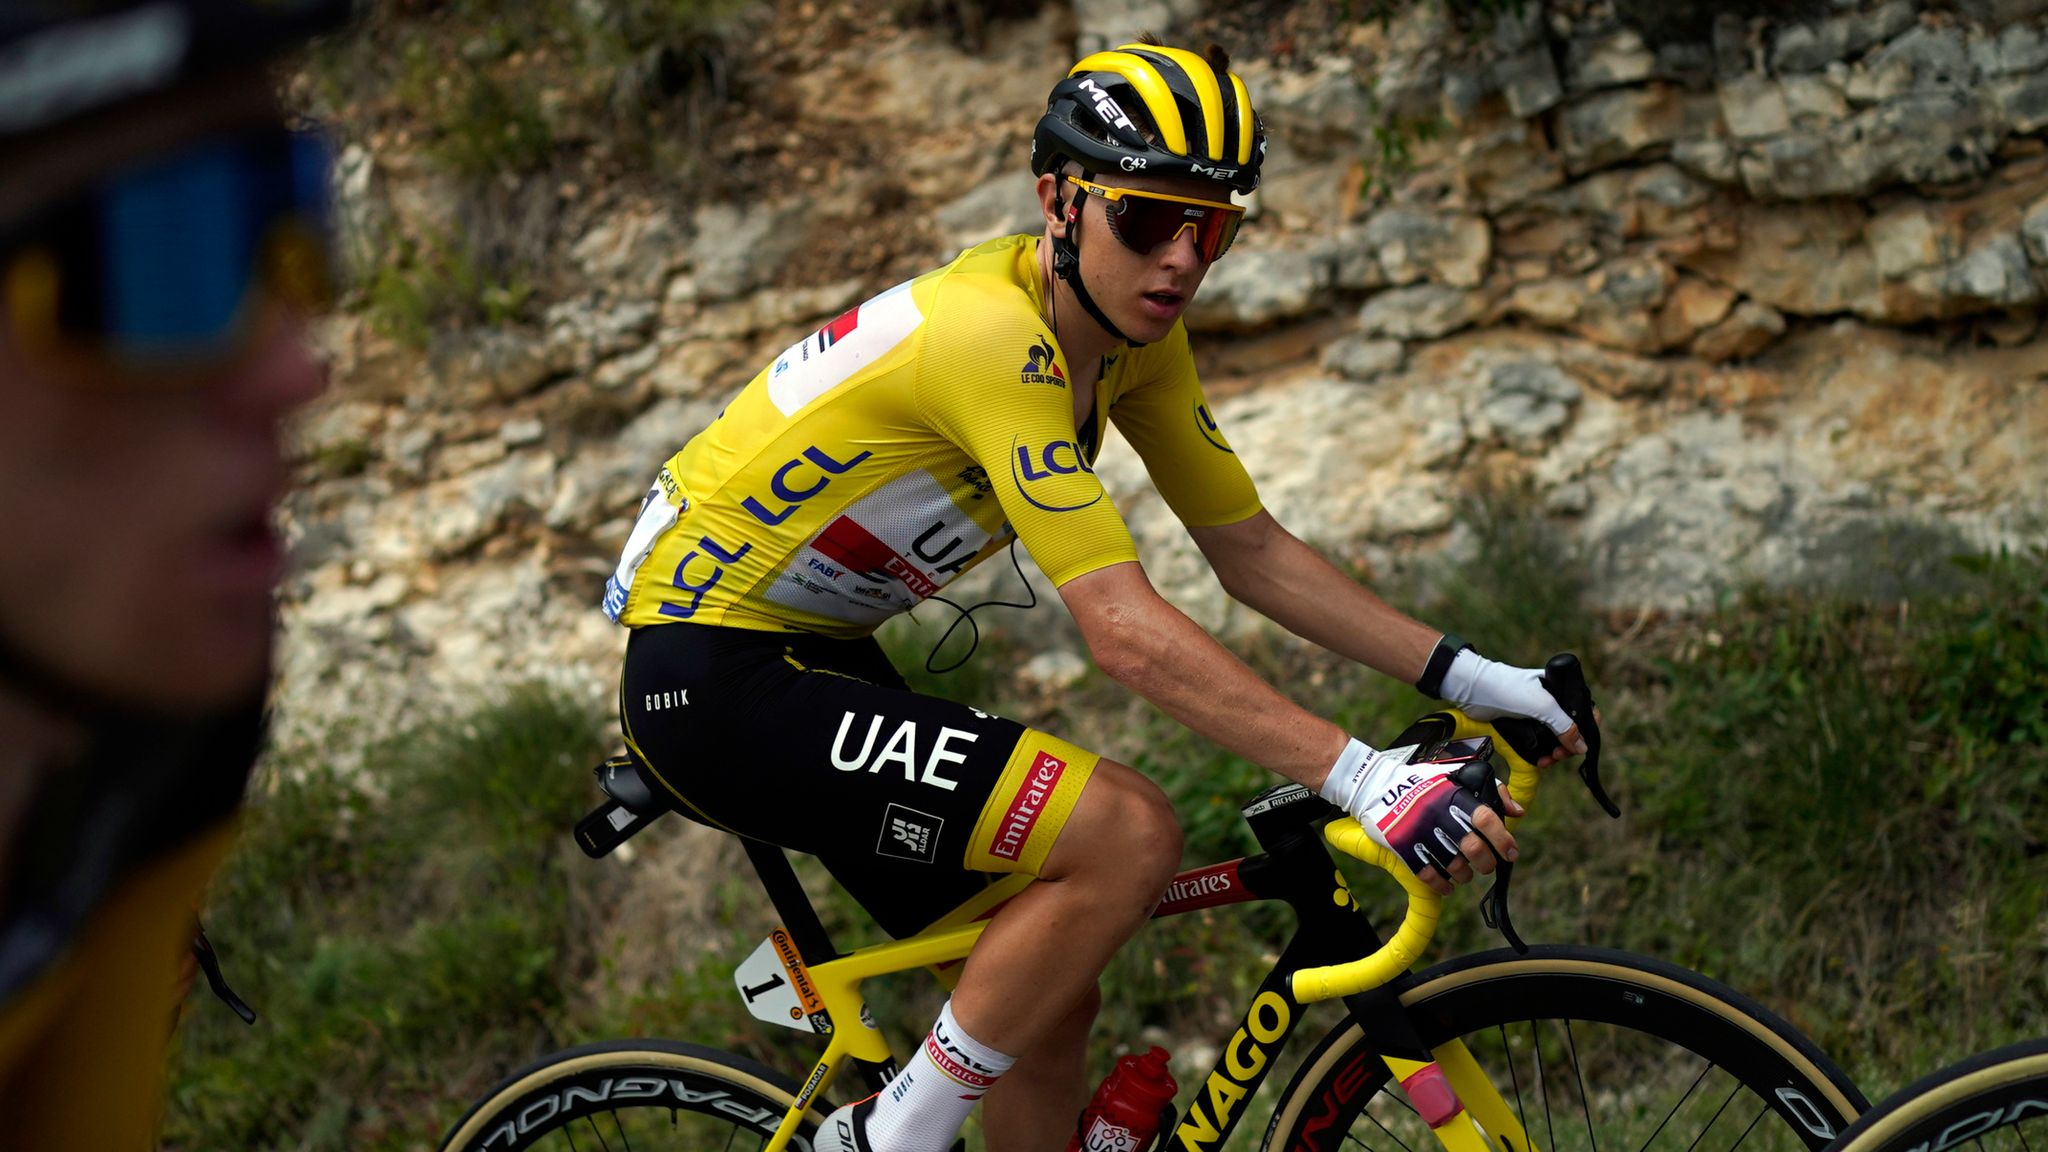 Tour de France 2021: Wout van Aert wins Stage 11 but Tadej Pogacar stays in yellow